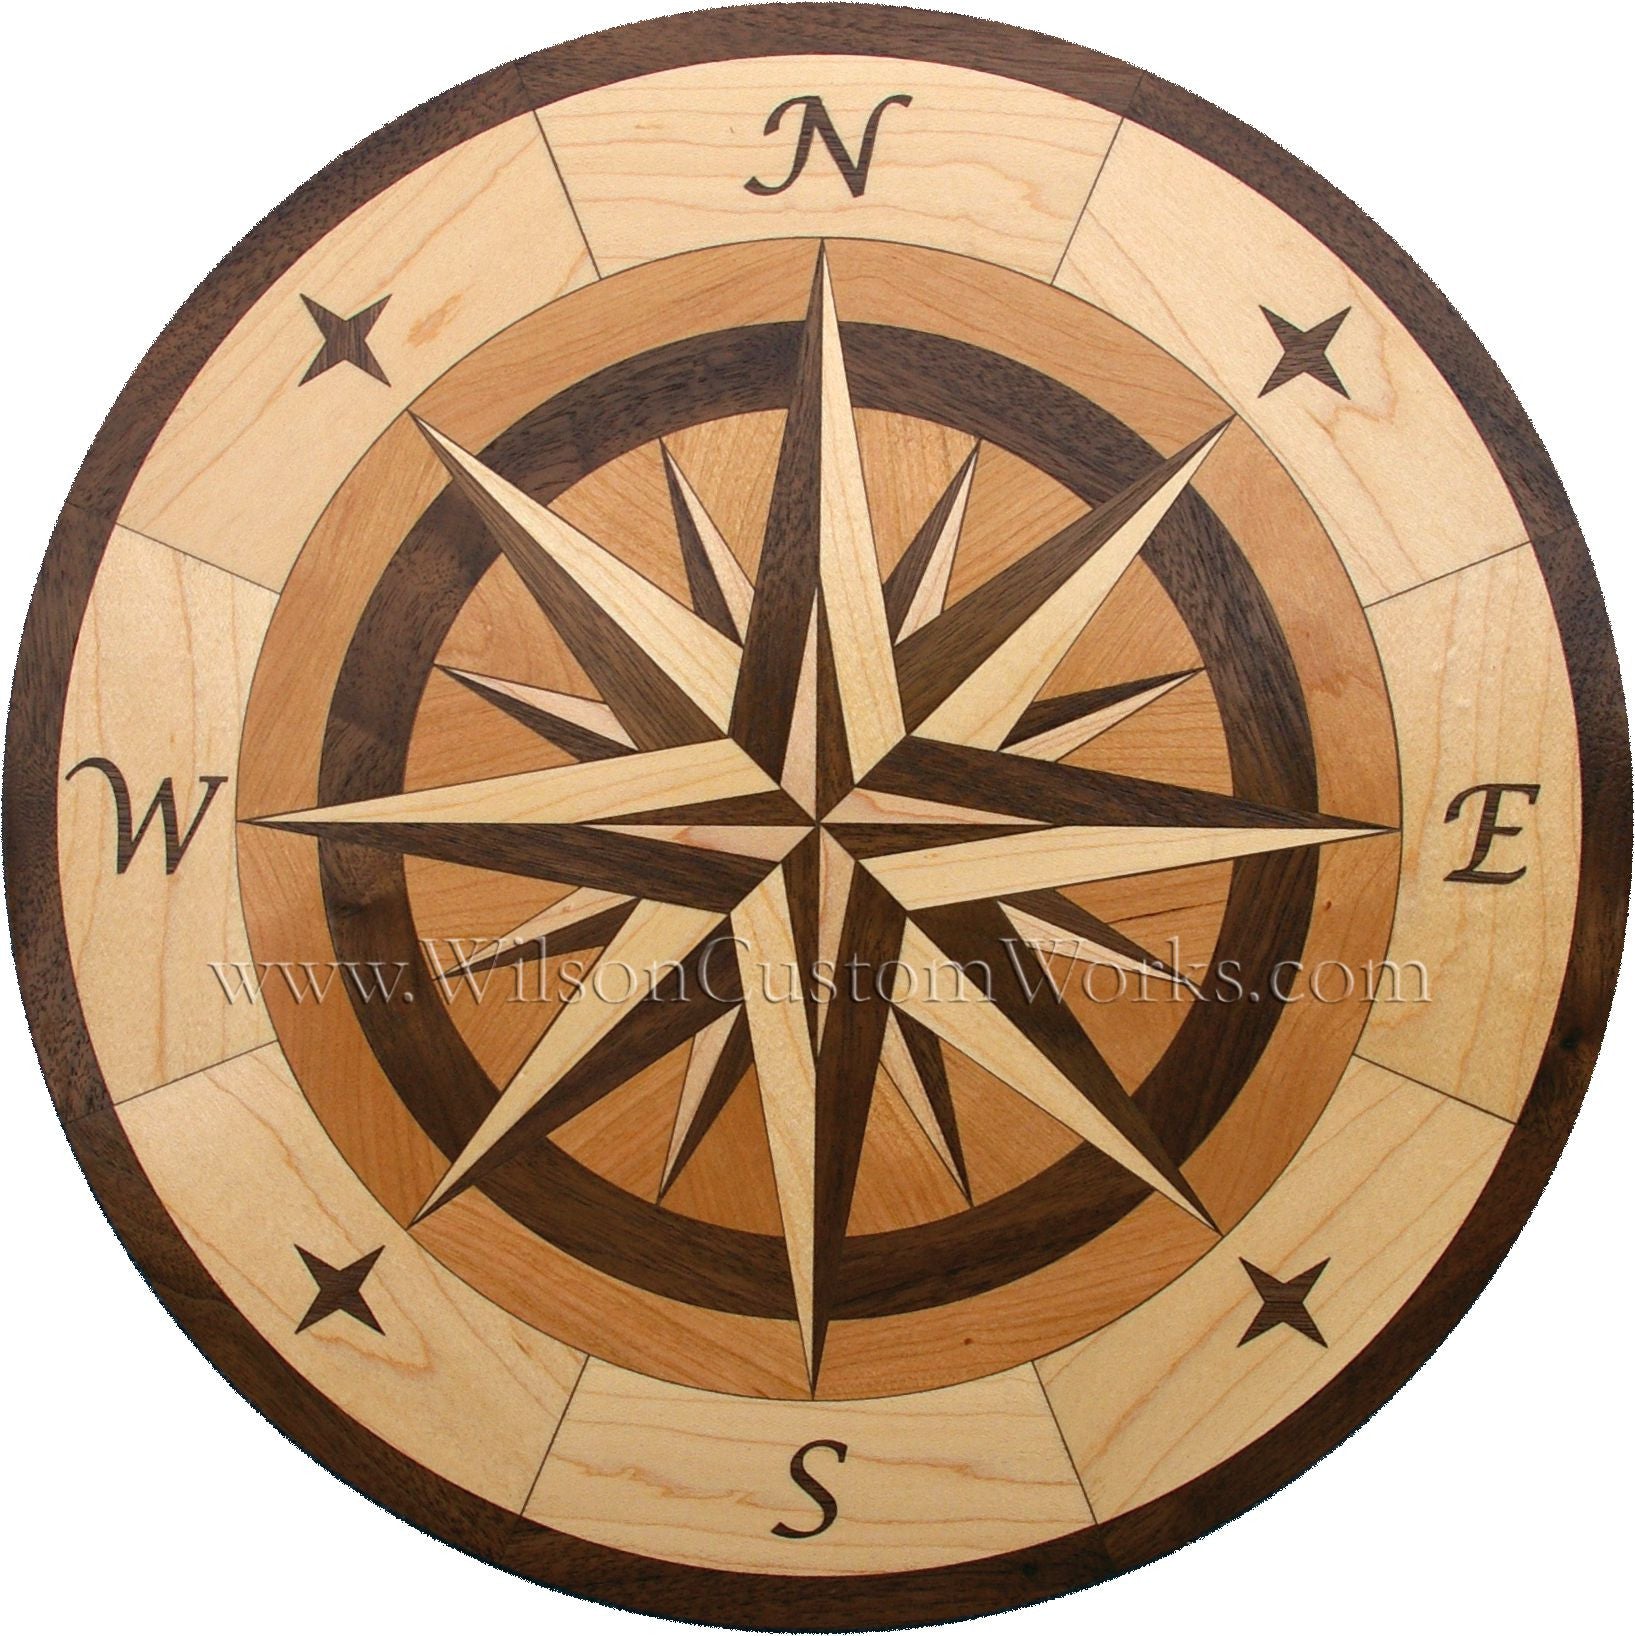 Wilson Custom Works hardwood wood floor inlay medallion nordik compass rose nautical design